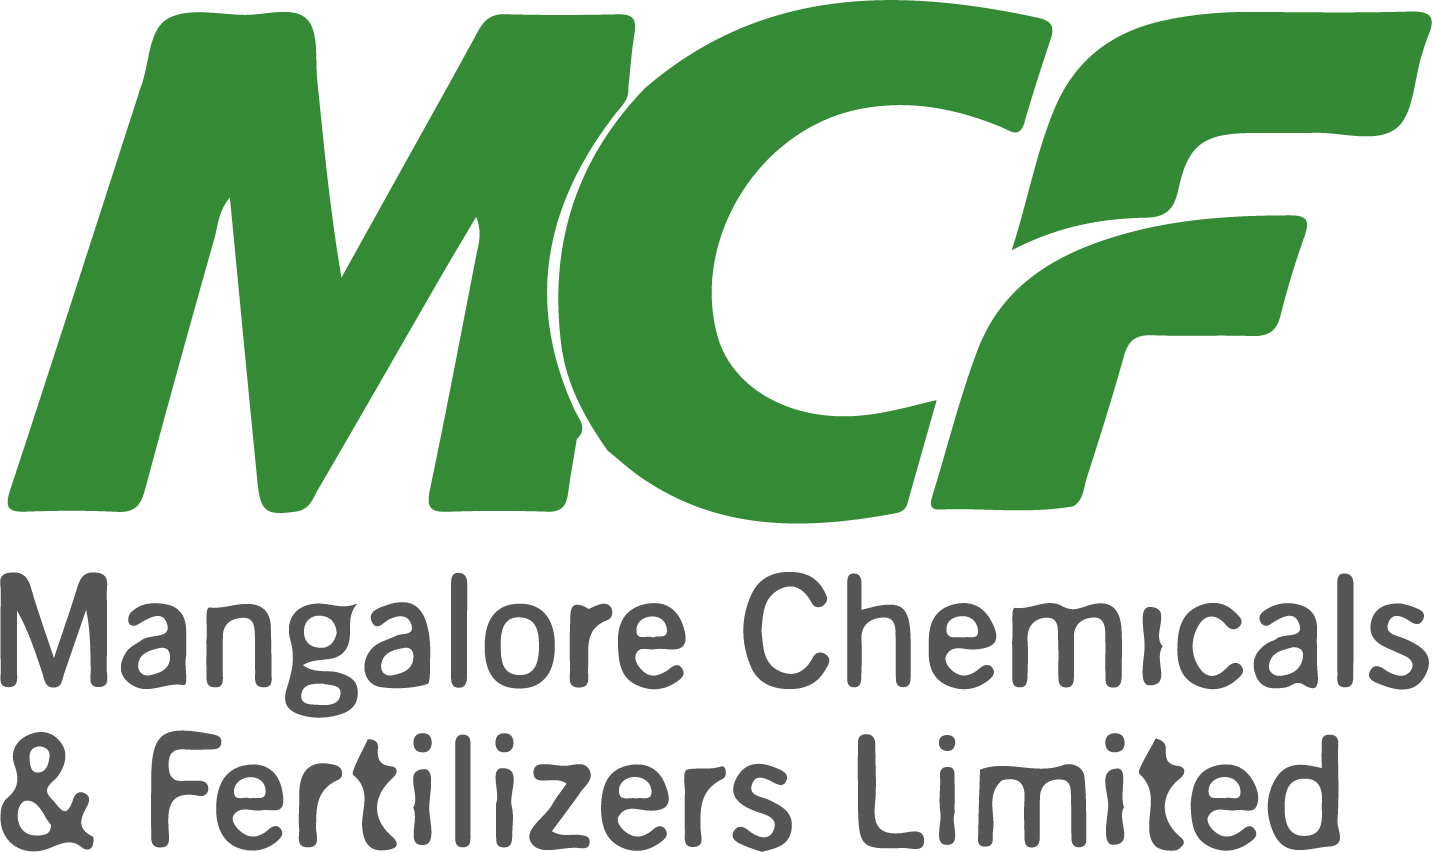 Mangalore Chemicals and Fertilizers logo large (transparent PNG)